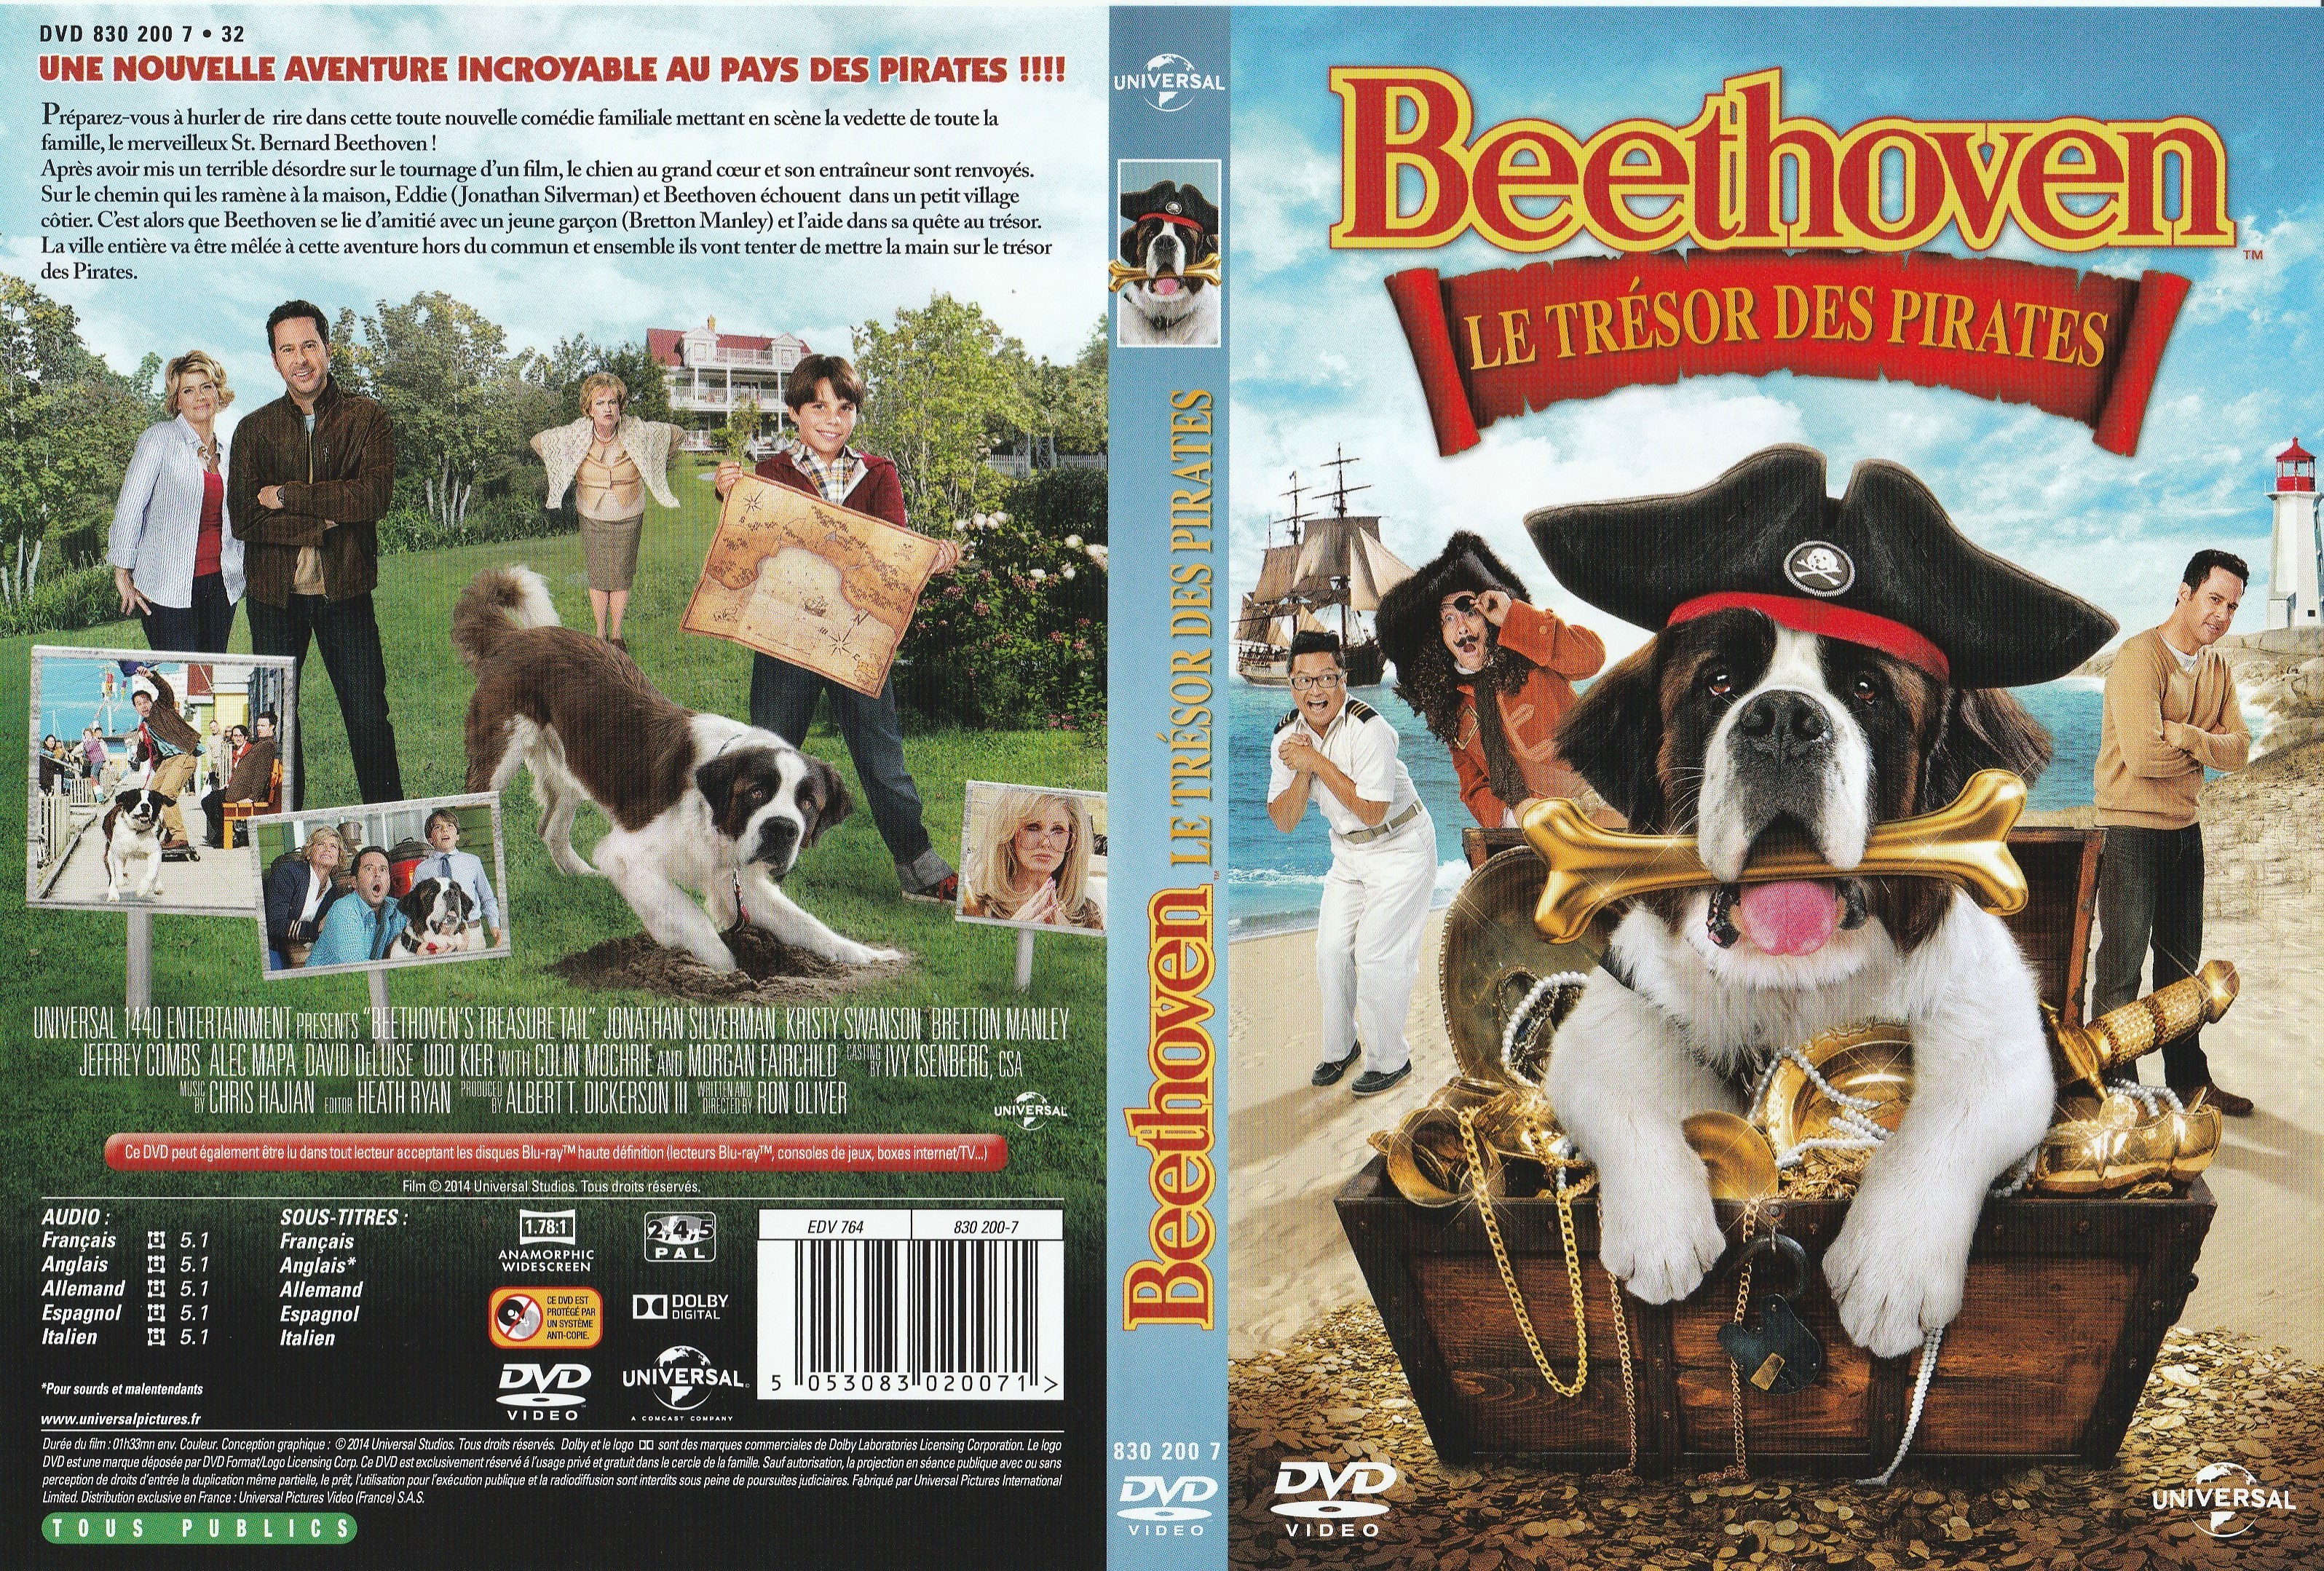 Jaquette DVD Beethoven - Le trsor des pirates